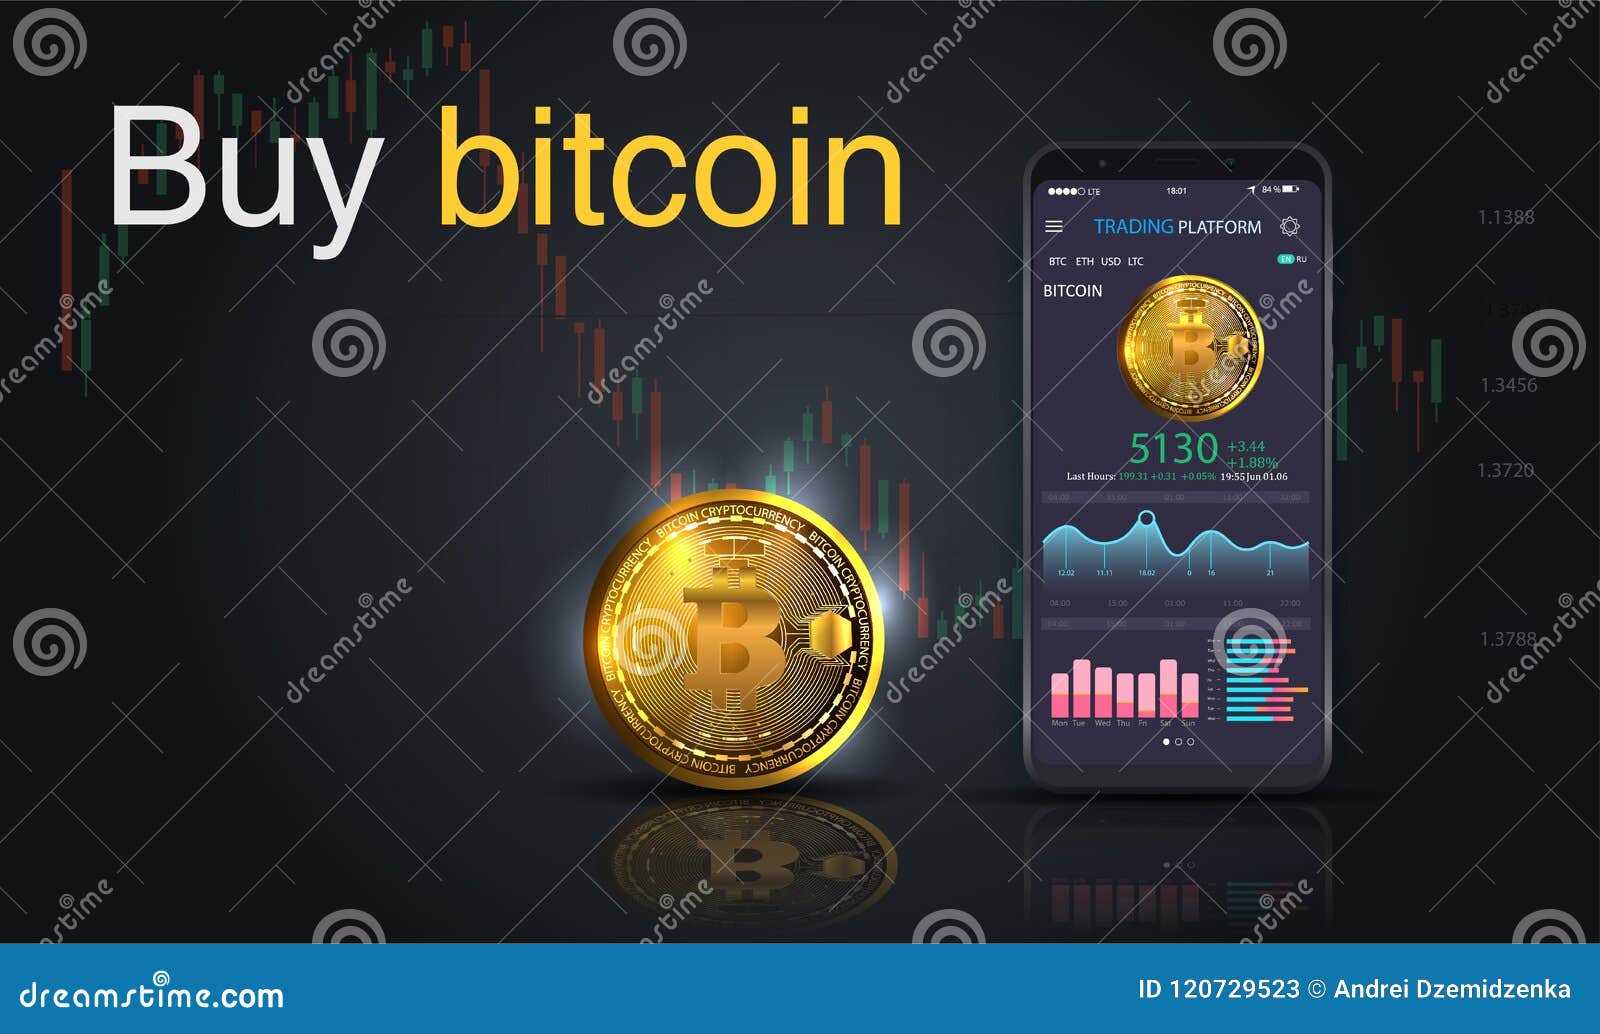 buy bitcoin online payment